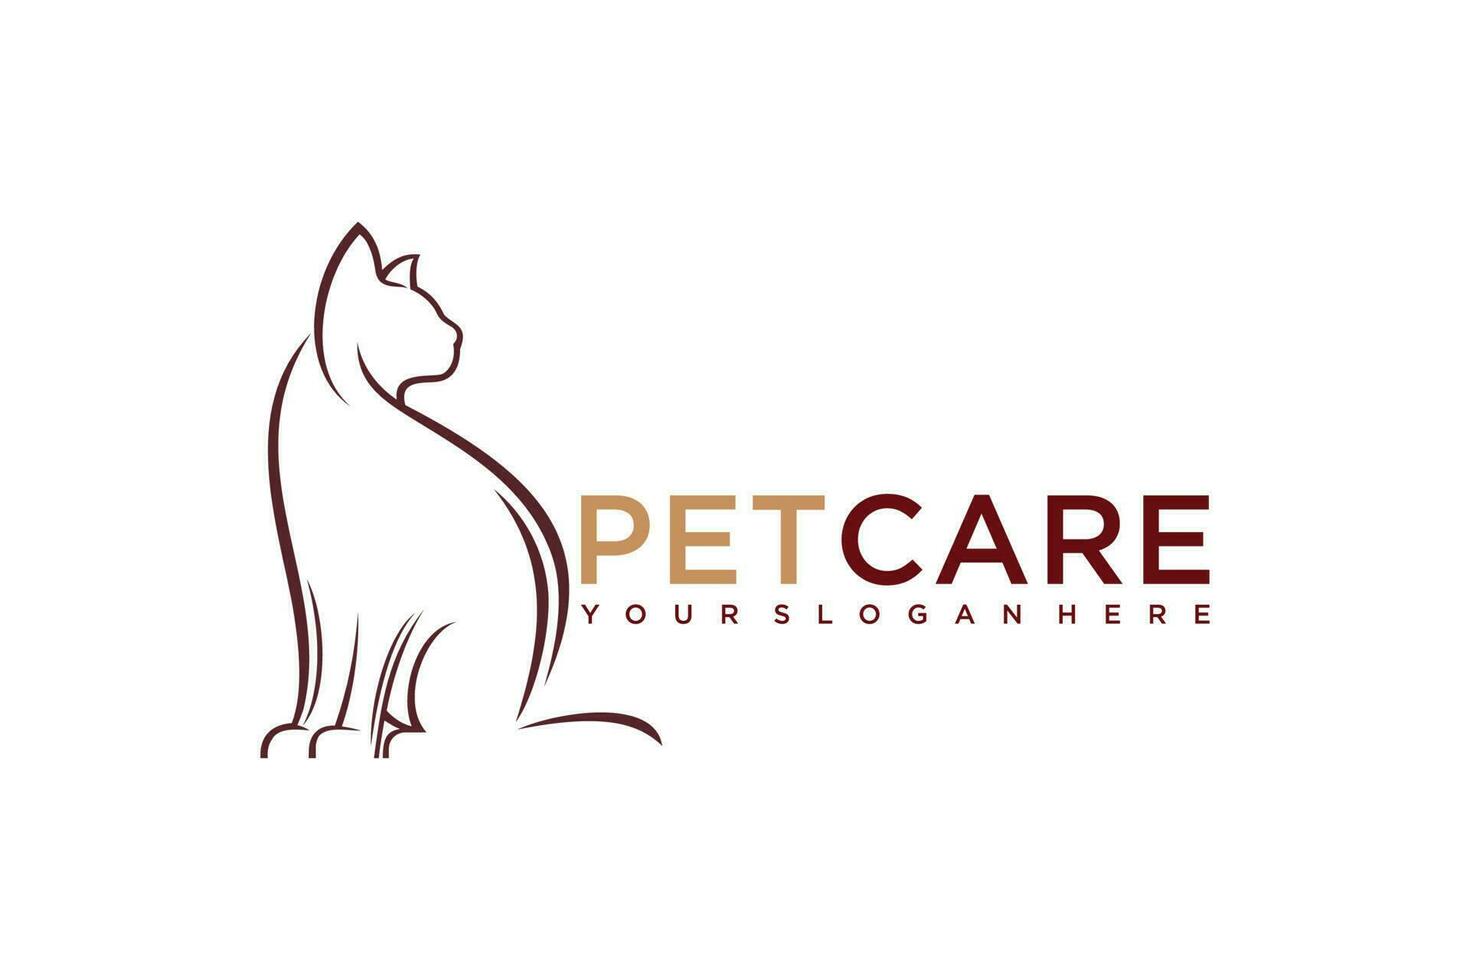 Katze logo.cat Logotyp. Haustier Geschäft Logo Konzept. Haustier Pflege Logo Konzept. Haustier Vektor Illustration